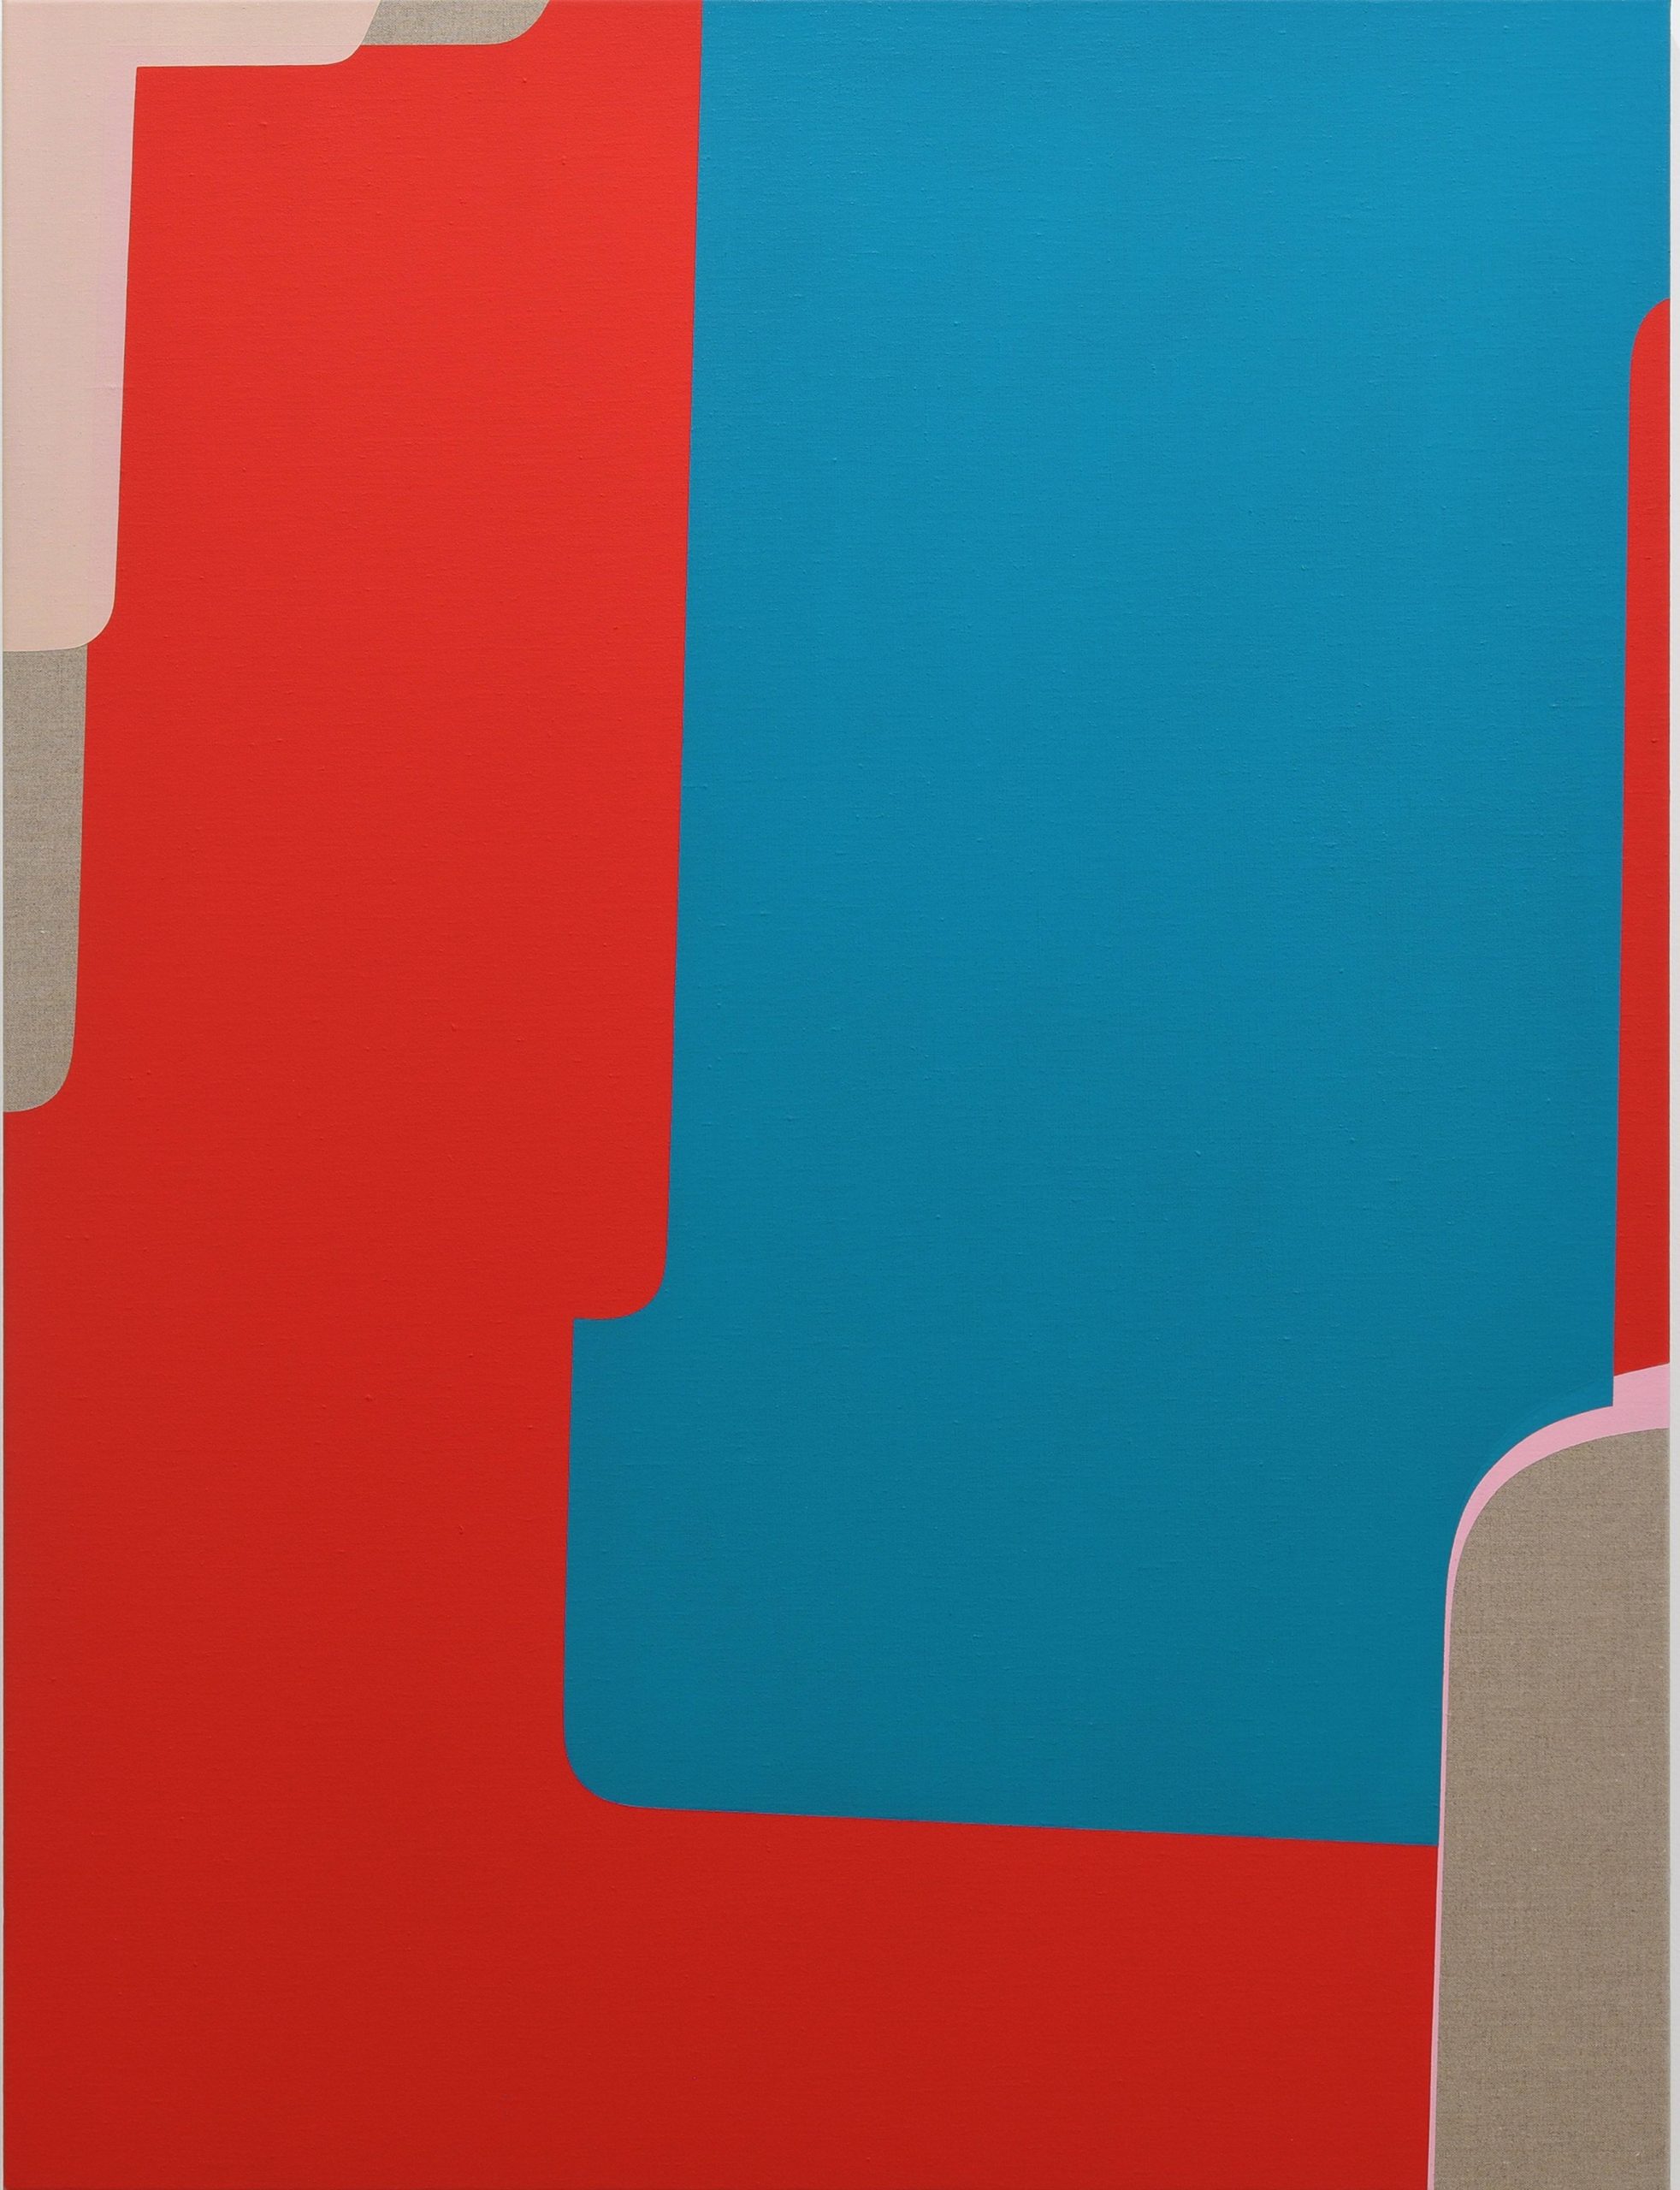 Matthew Browne 'Des Vu' vinyl tempera and oil on linen 107 x 81cm $10,500